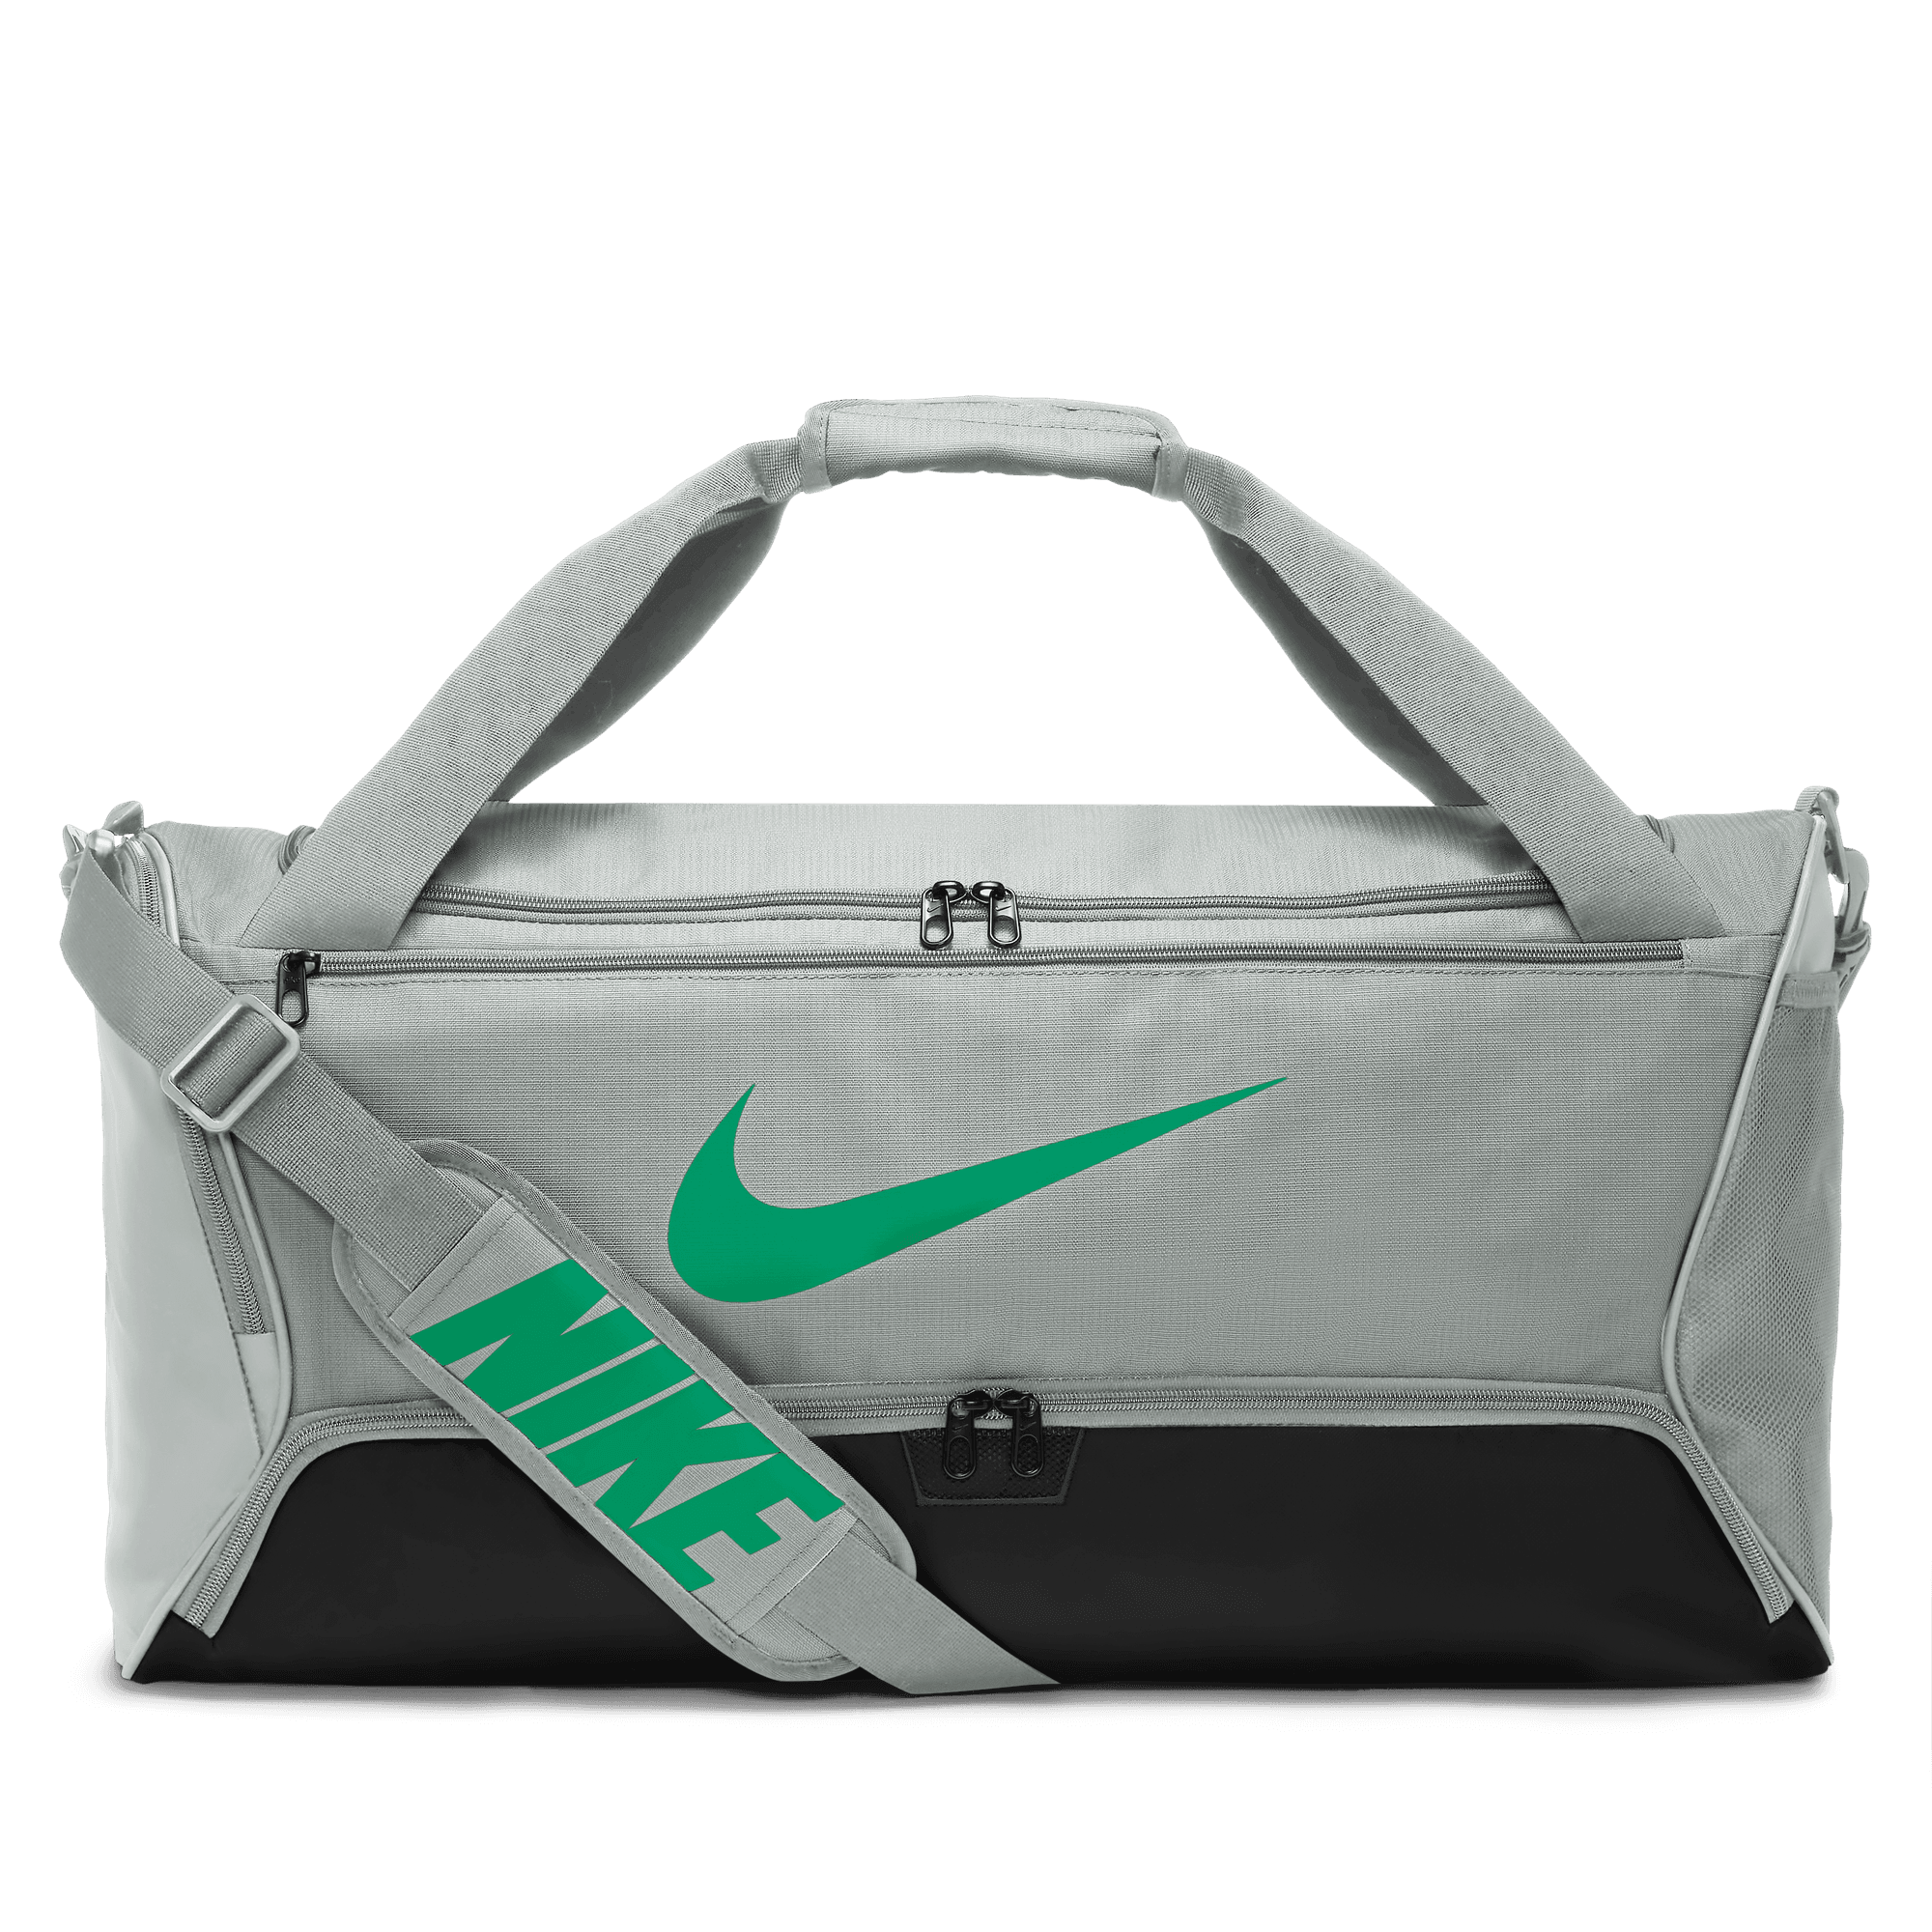 Nike Unisex-Adult Nike Brasilia Small Duffel - 9.0 Bag